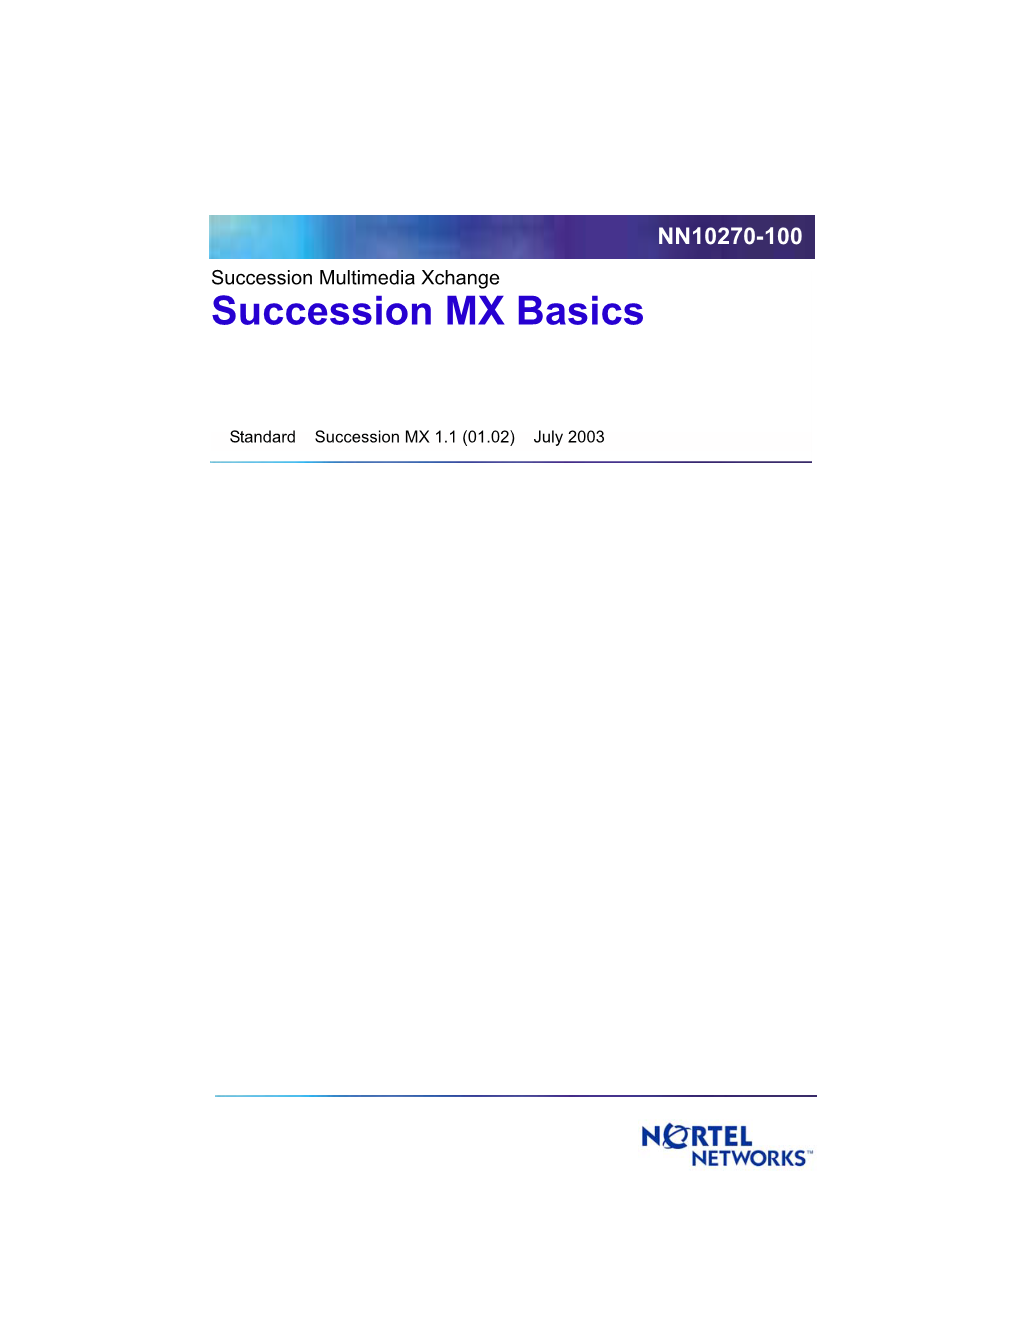 Succession MX Basics